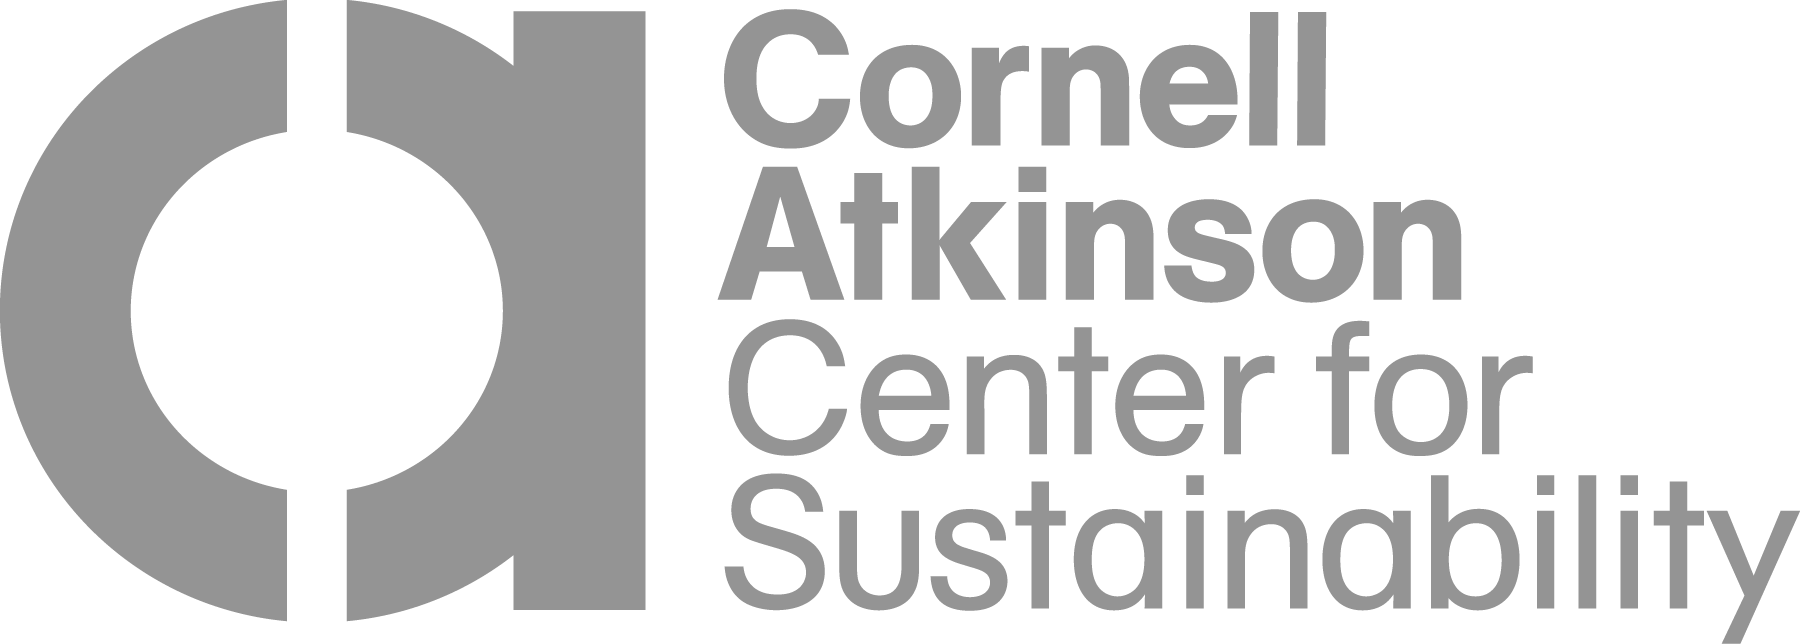 Logo Cornell Atkinson Center for Sustainability